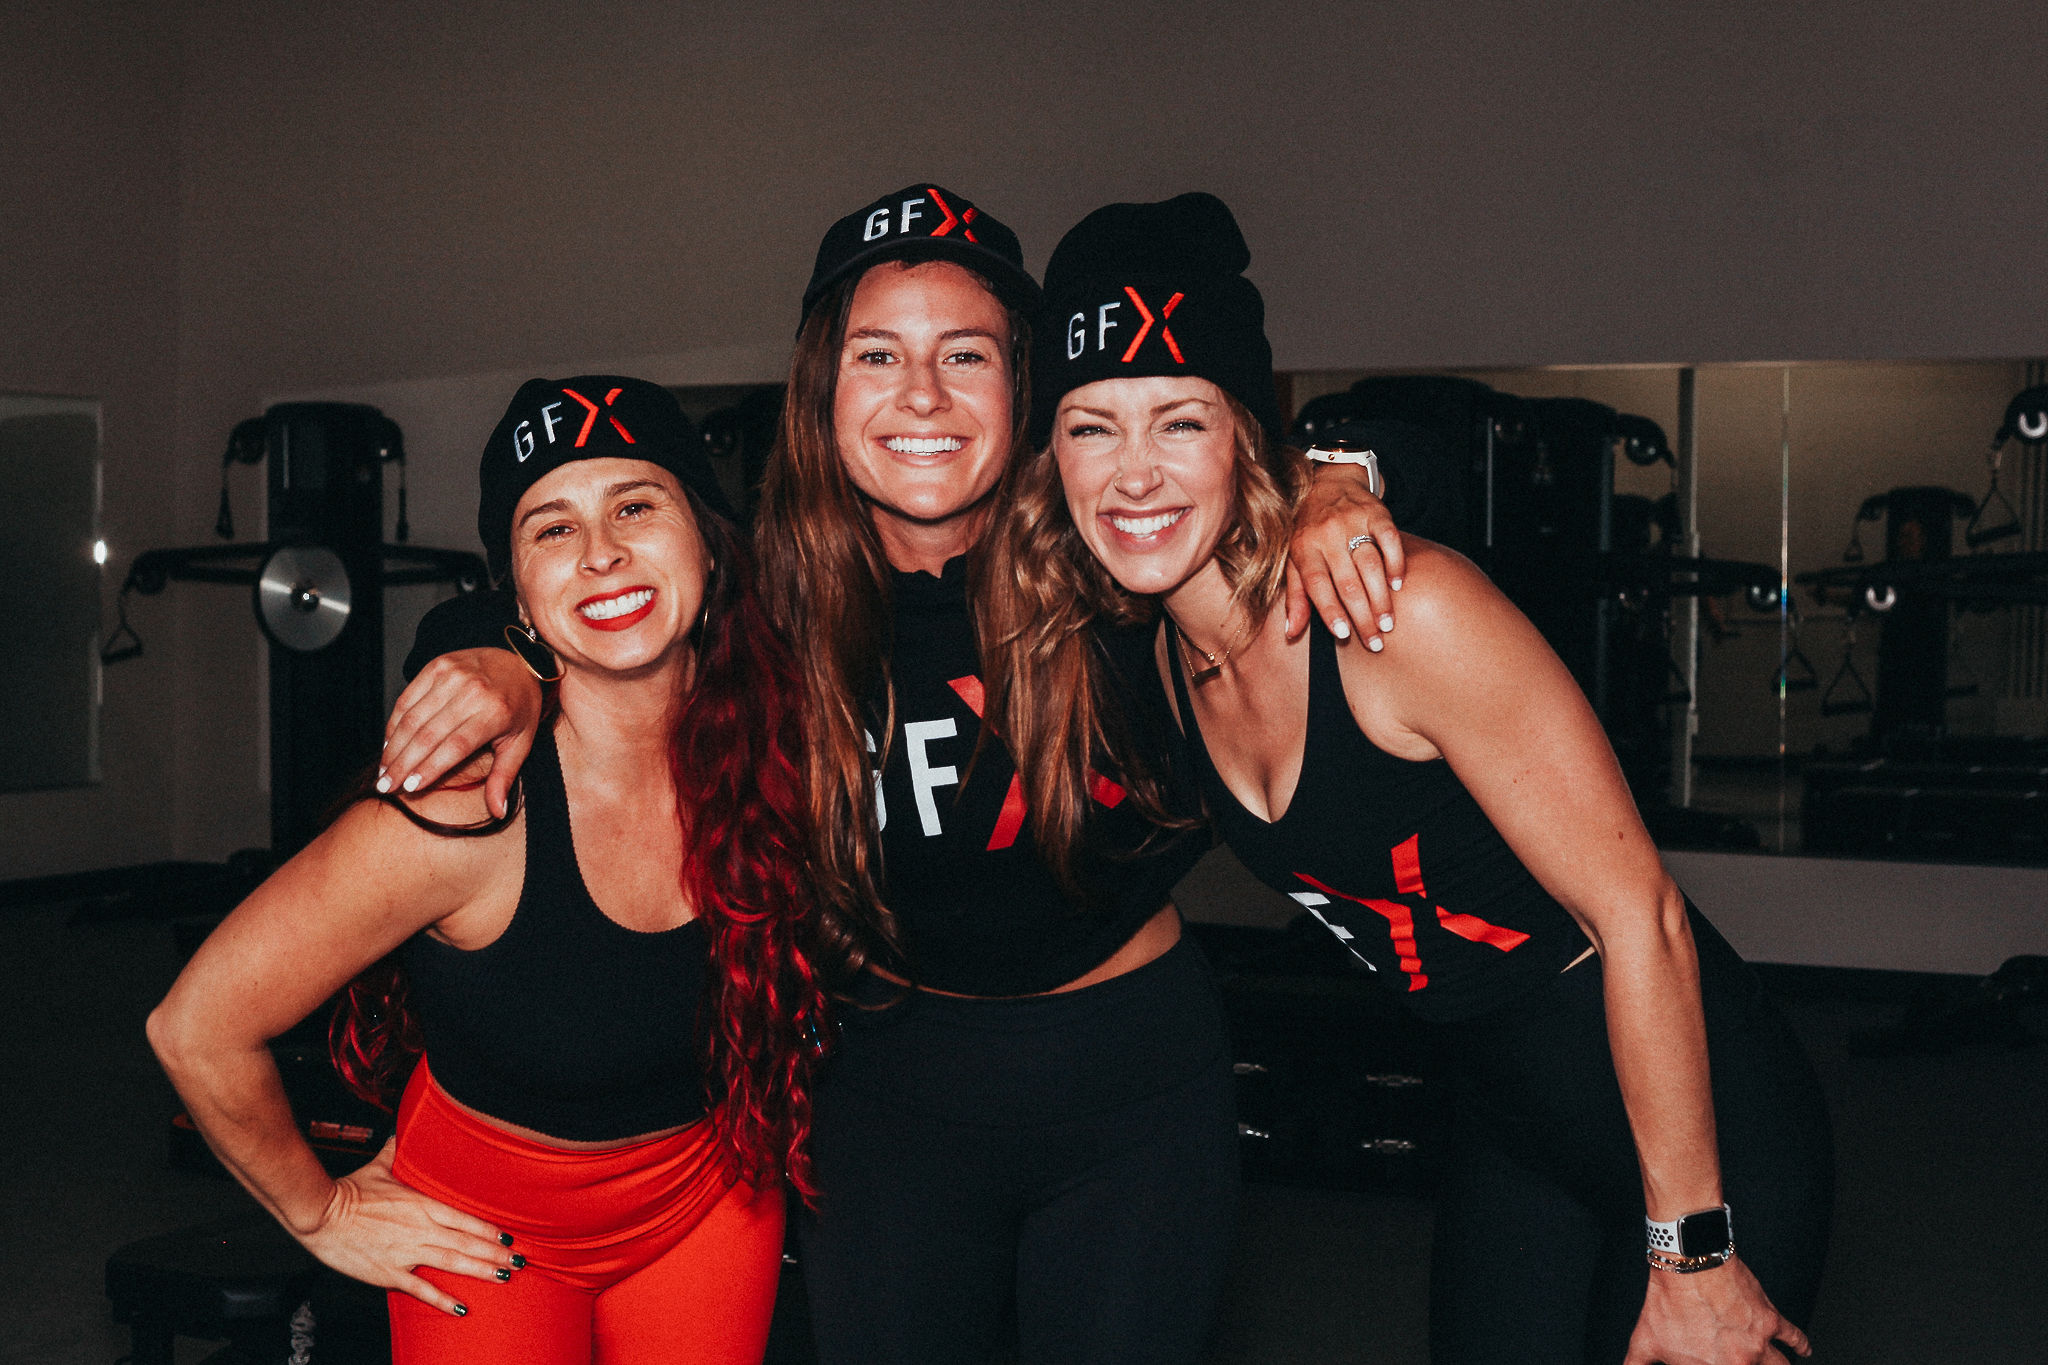 GFX-Fitness X Community